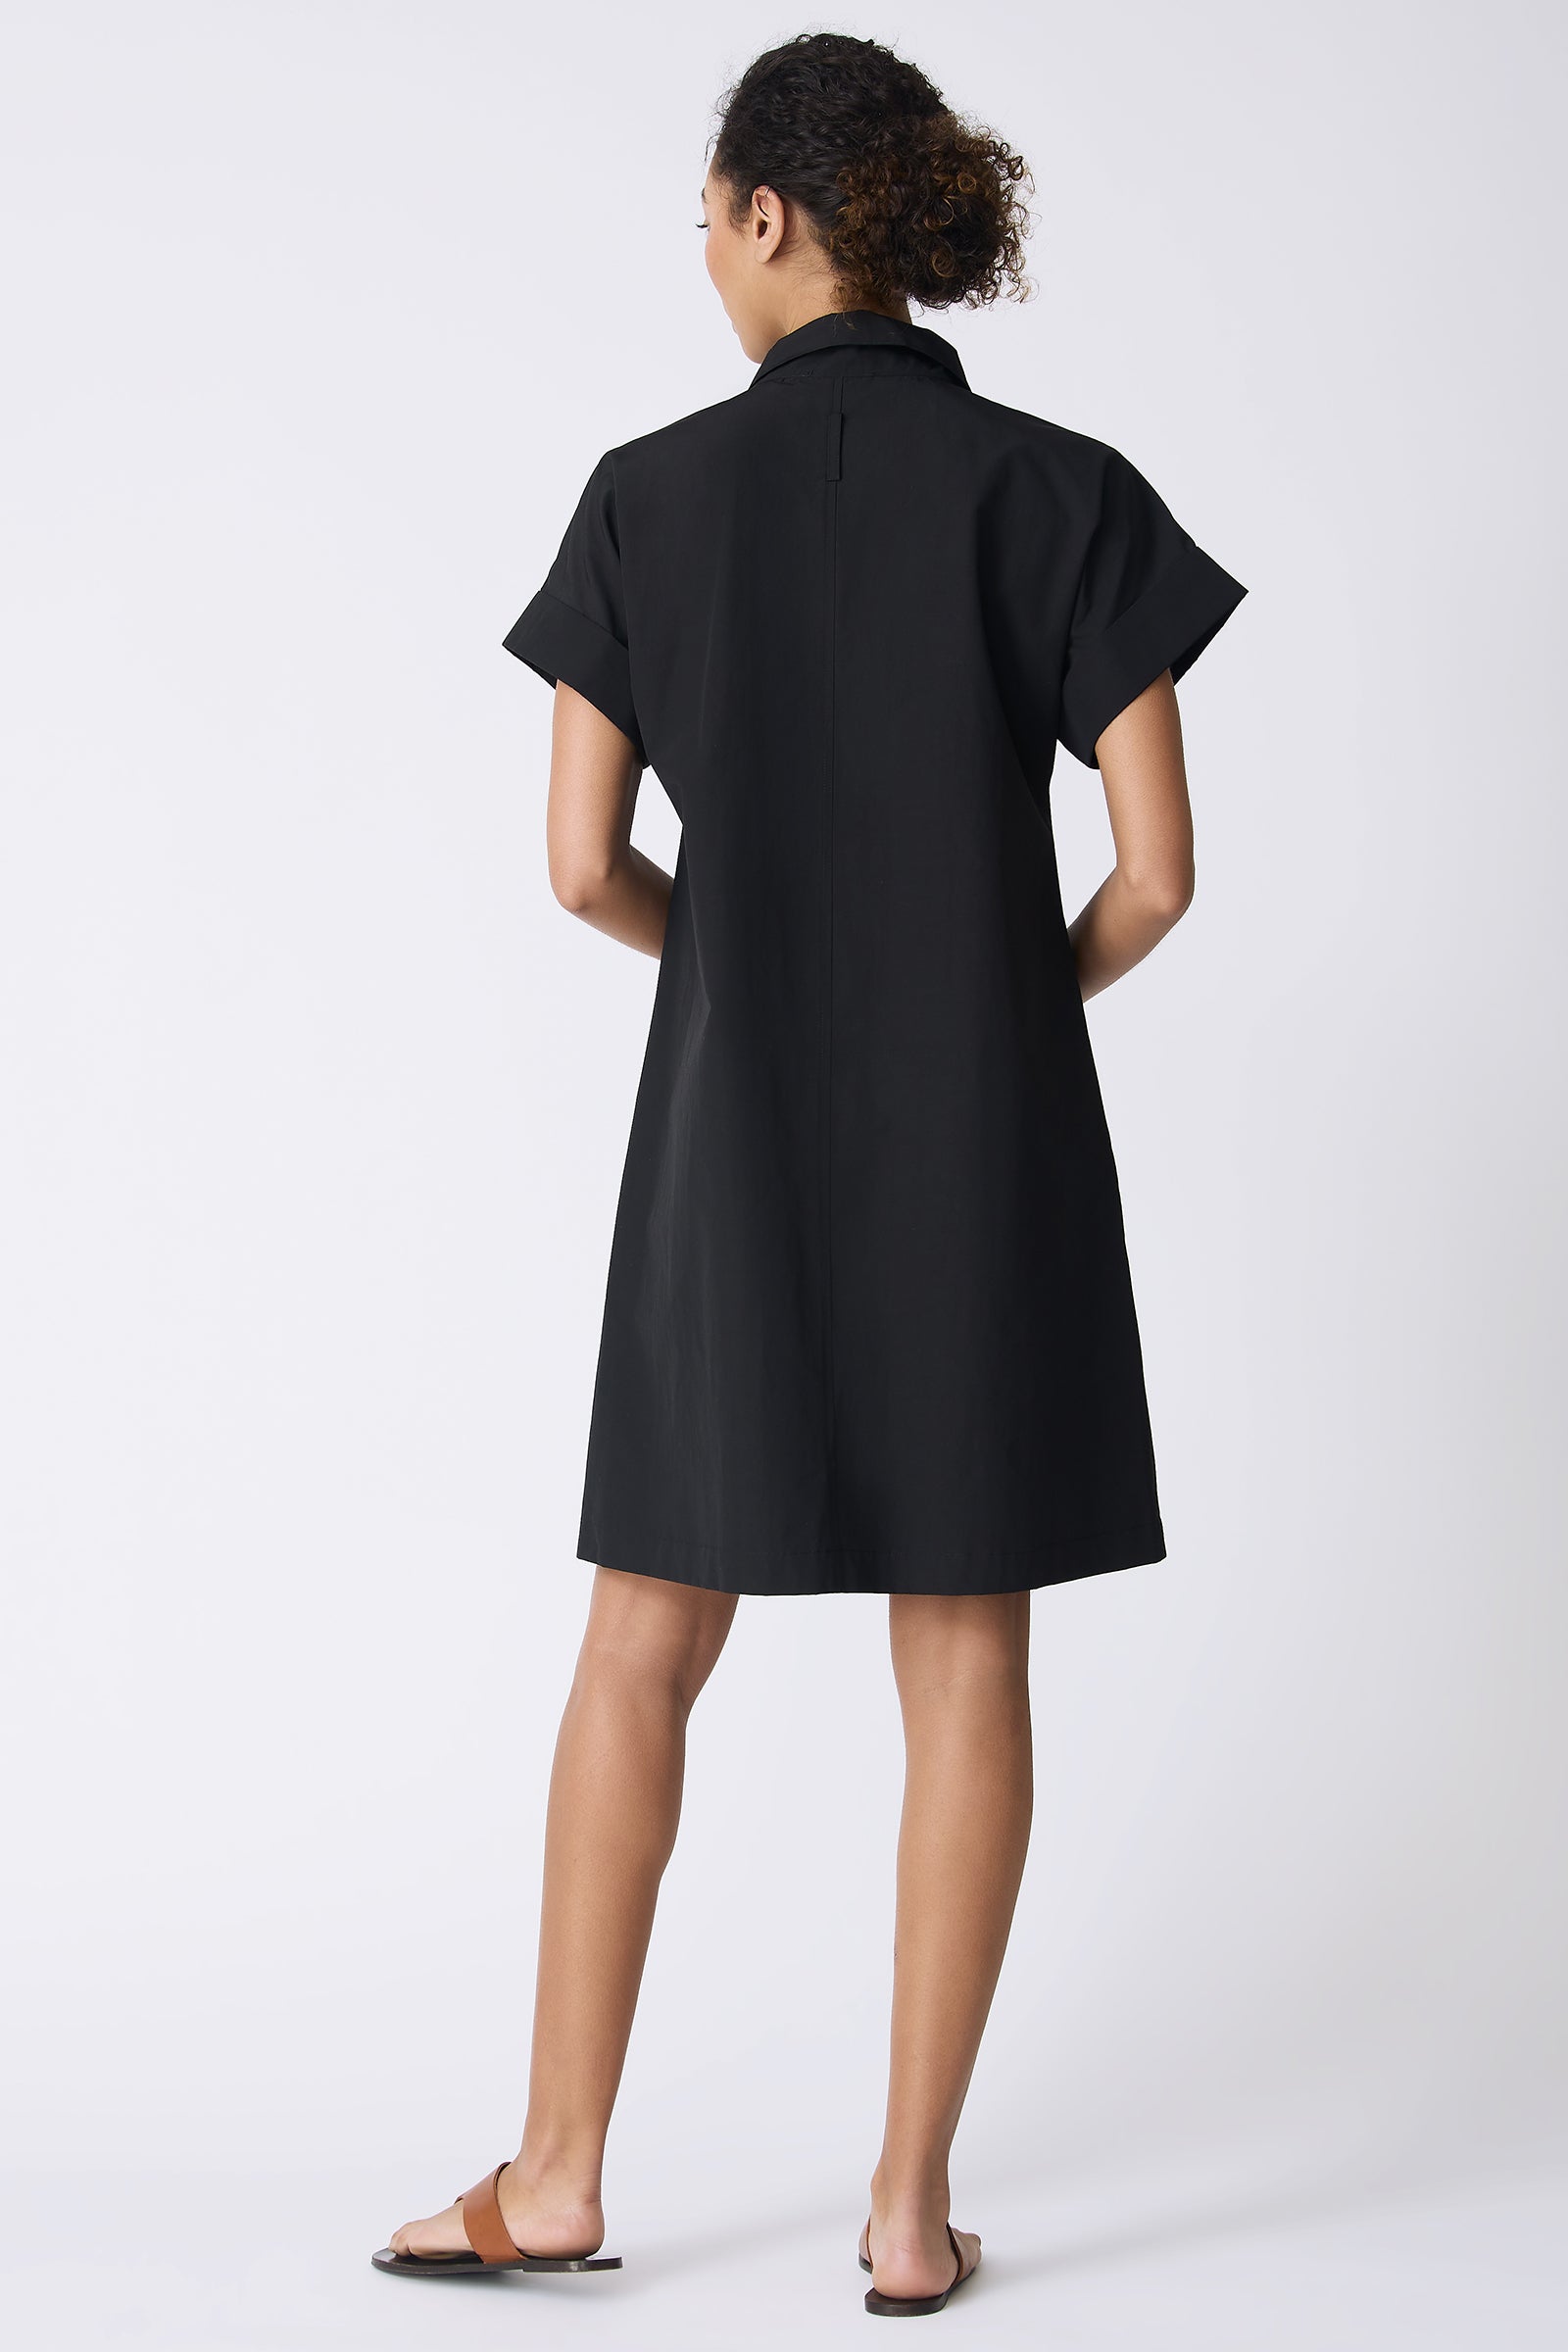 Kal Rieman Holly Kimono Dress in Black on model full back view